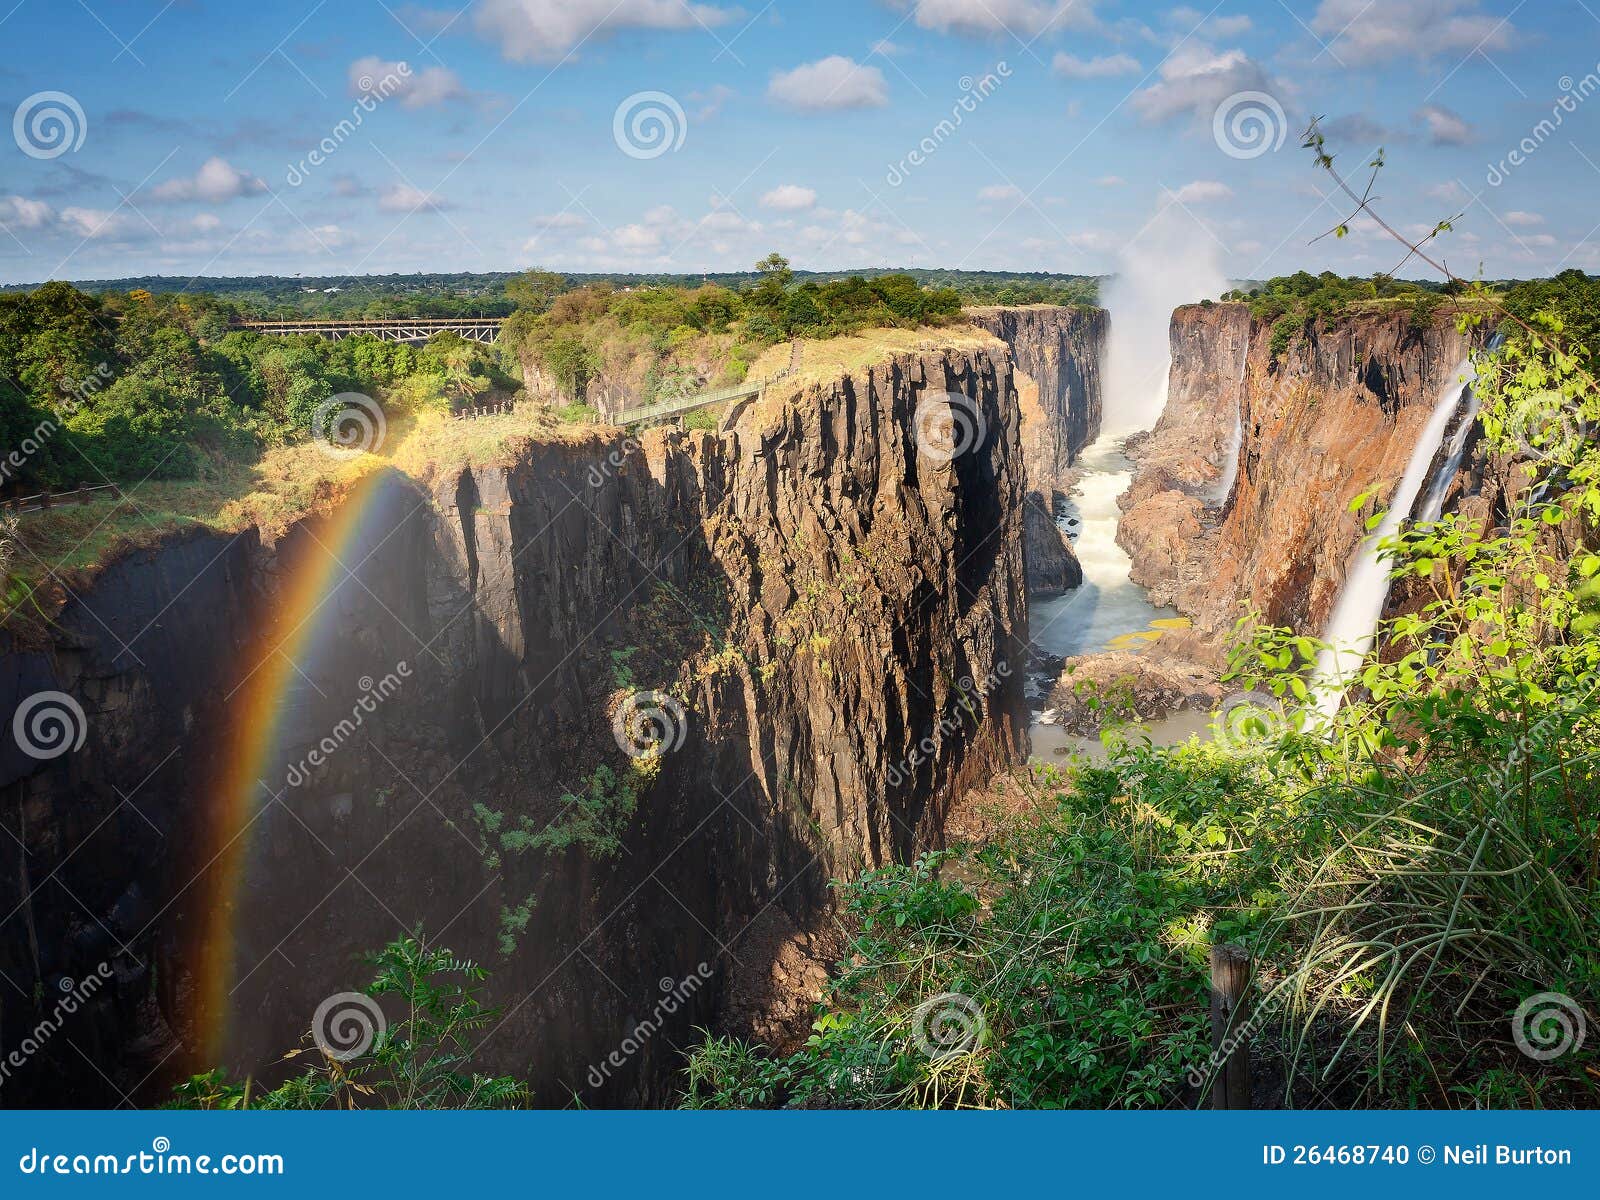 victoria falls, zambia, and rainbow